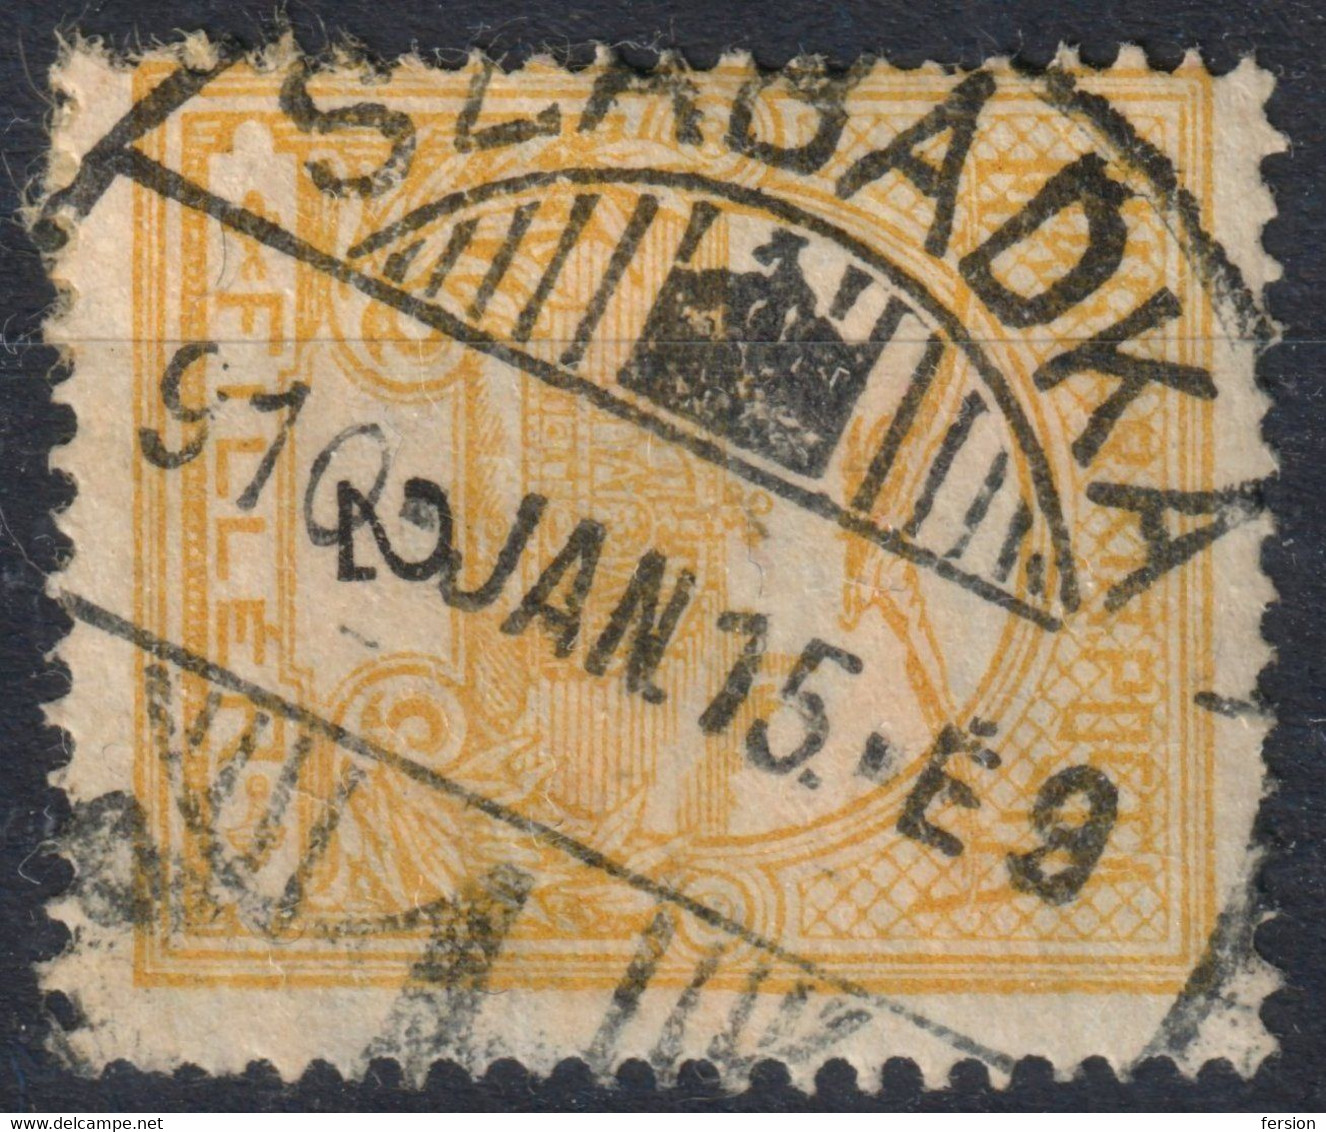 SZABADKA SUBOTICA Postmark TURUL Crown 1910 Hungary SERBIA Vojvodina SHS BACKA BÁCS BODROG County KuK 2 Fill - Préphilatélie